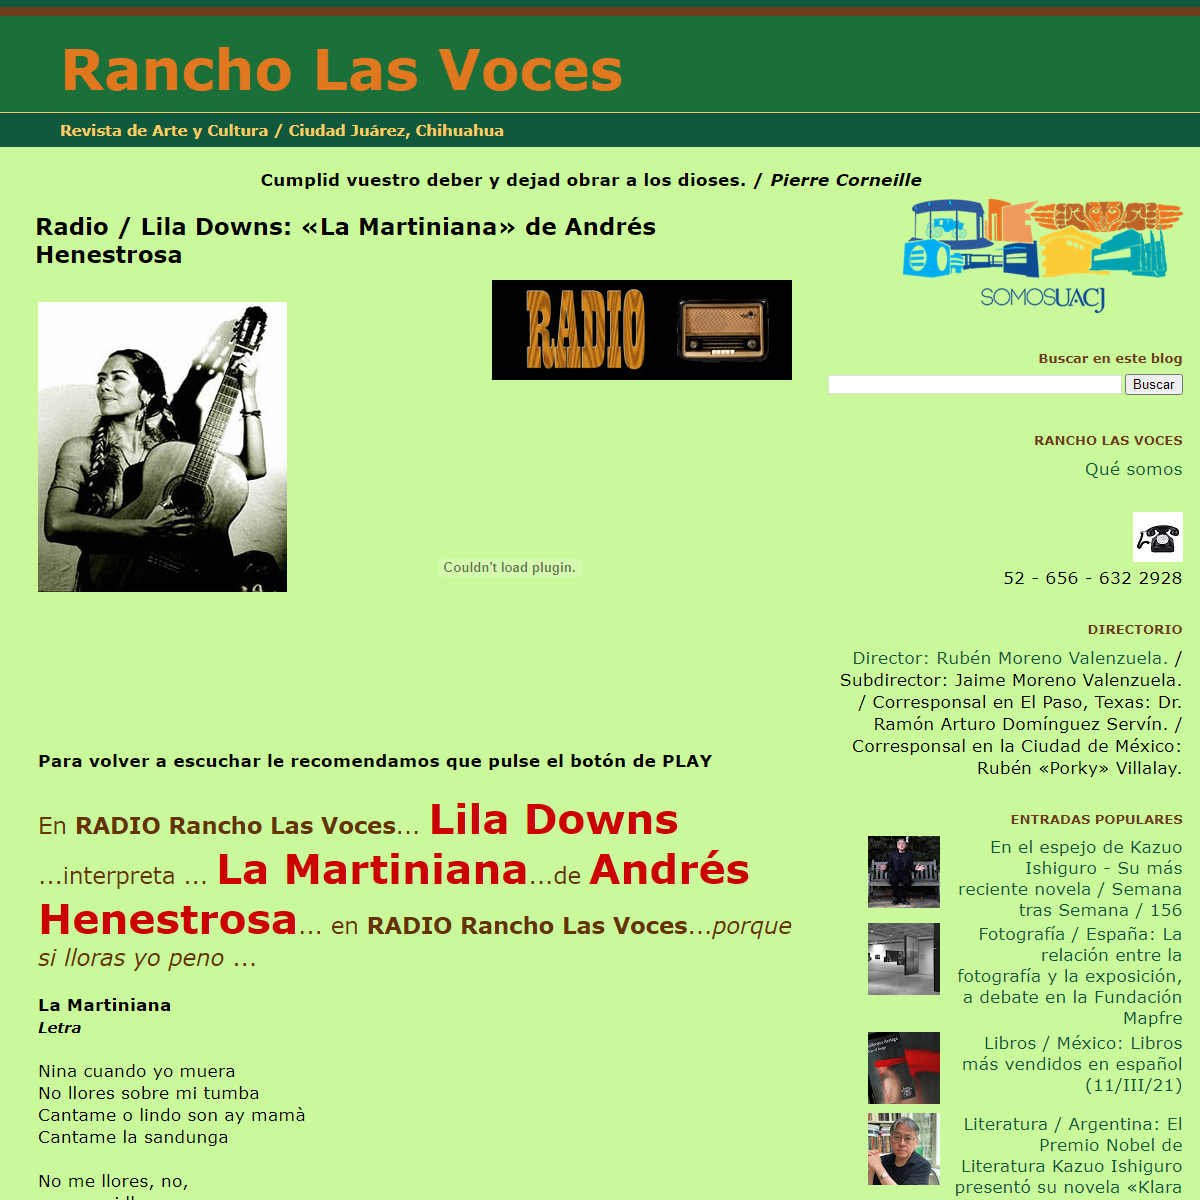 A complete backup of https://rancholasvoces.blogspot.com/2008/01/radio-lila-downs-la-martiniana-de.html